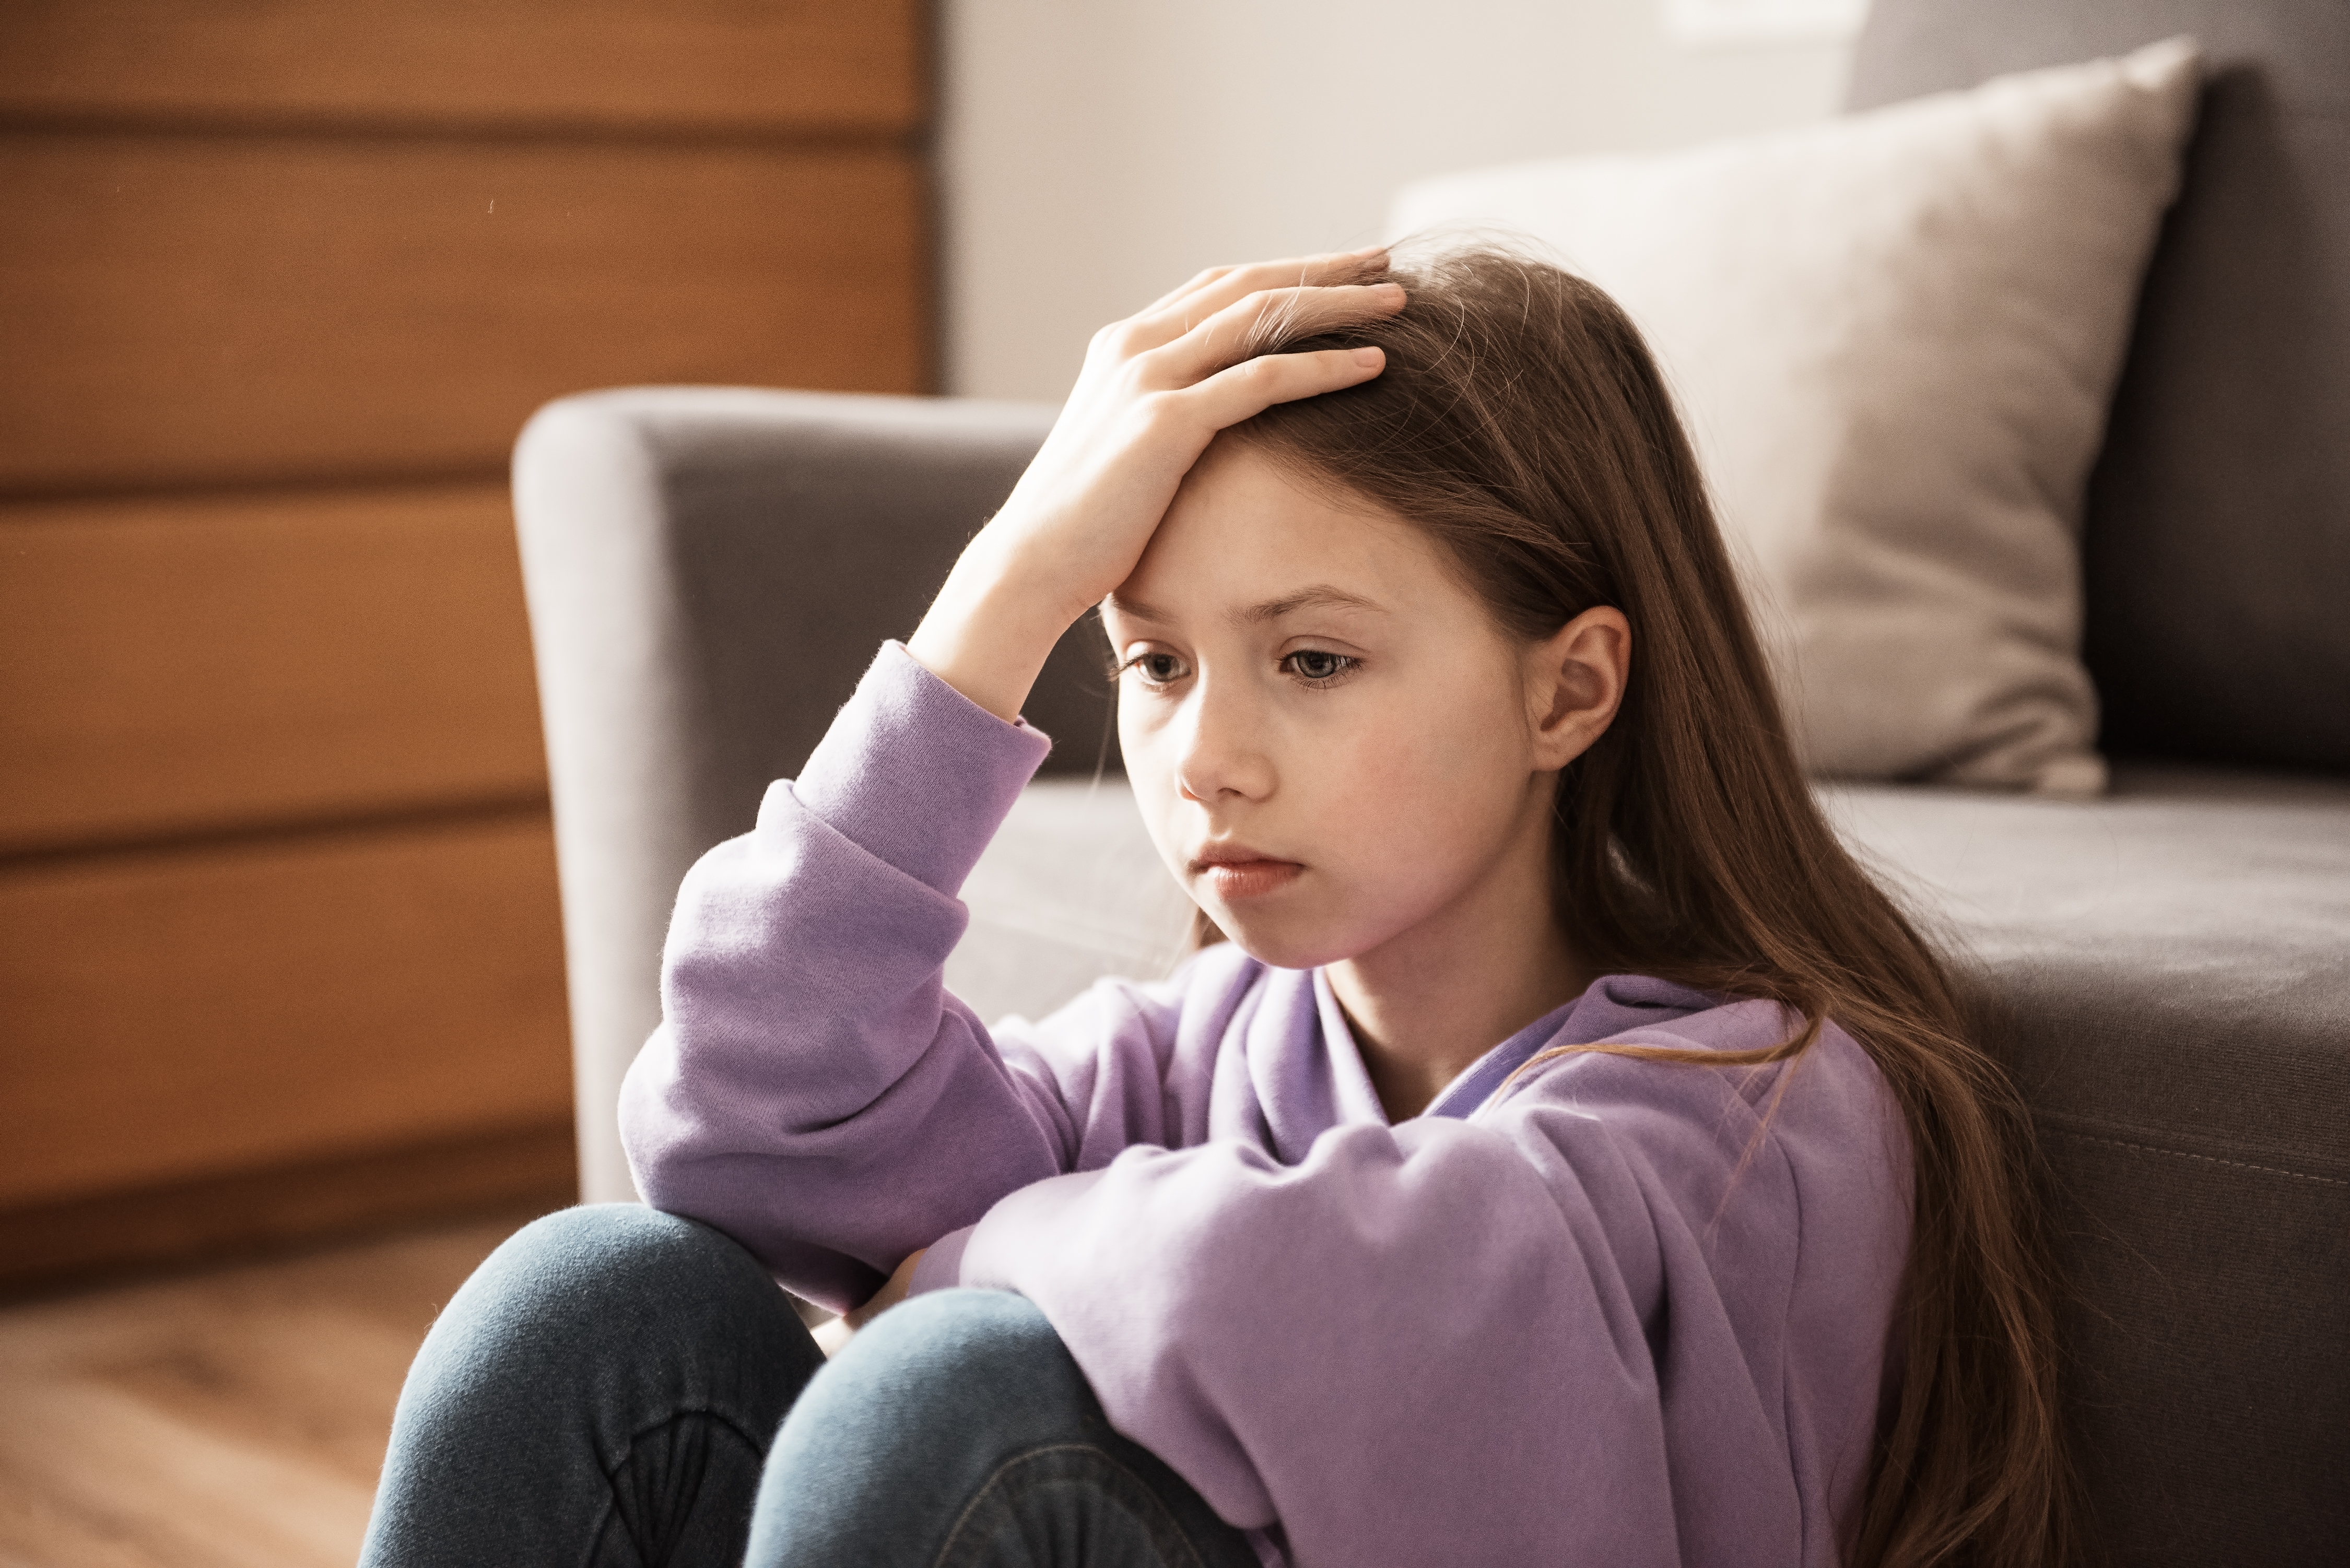 A sad teenage girl | Source: Shutterstock